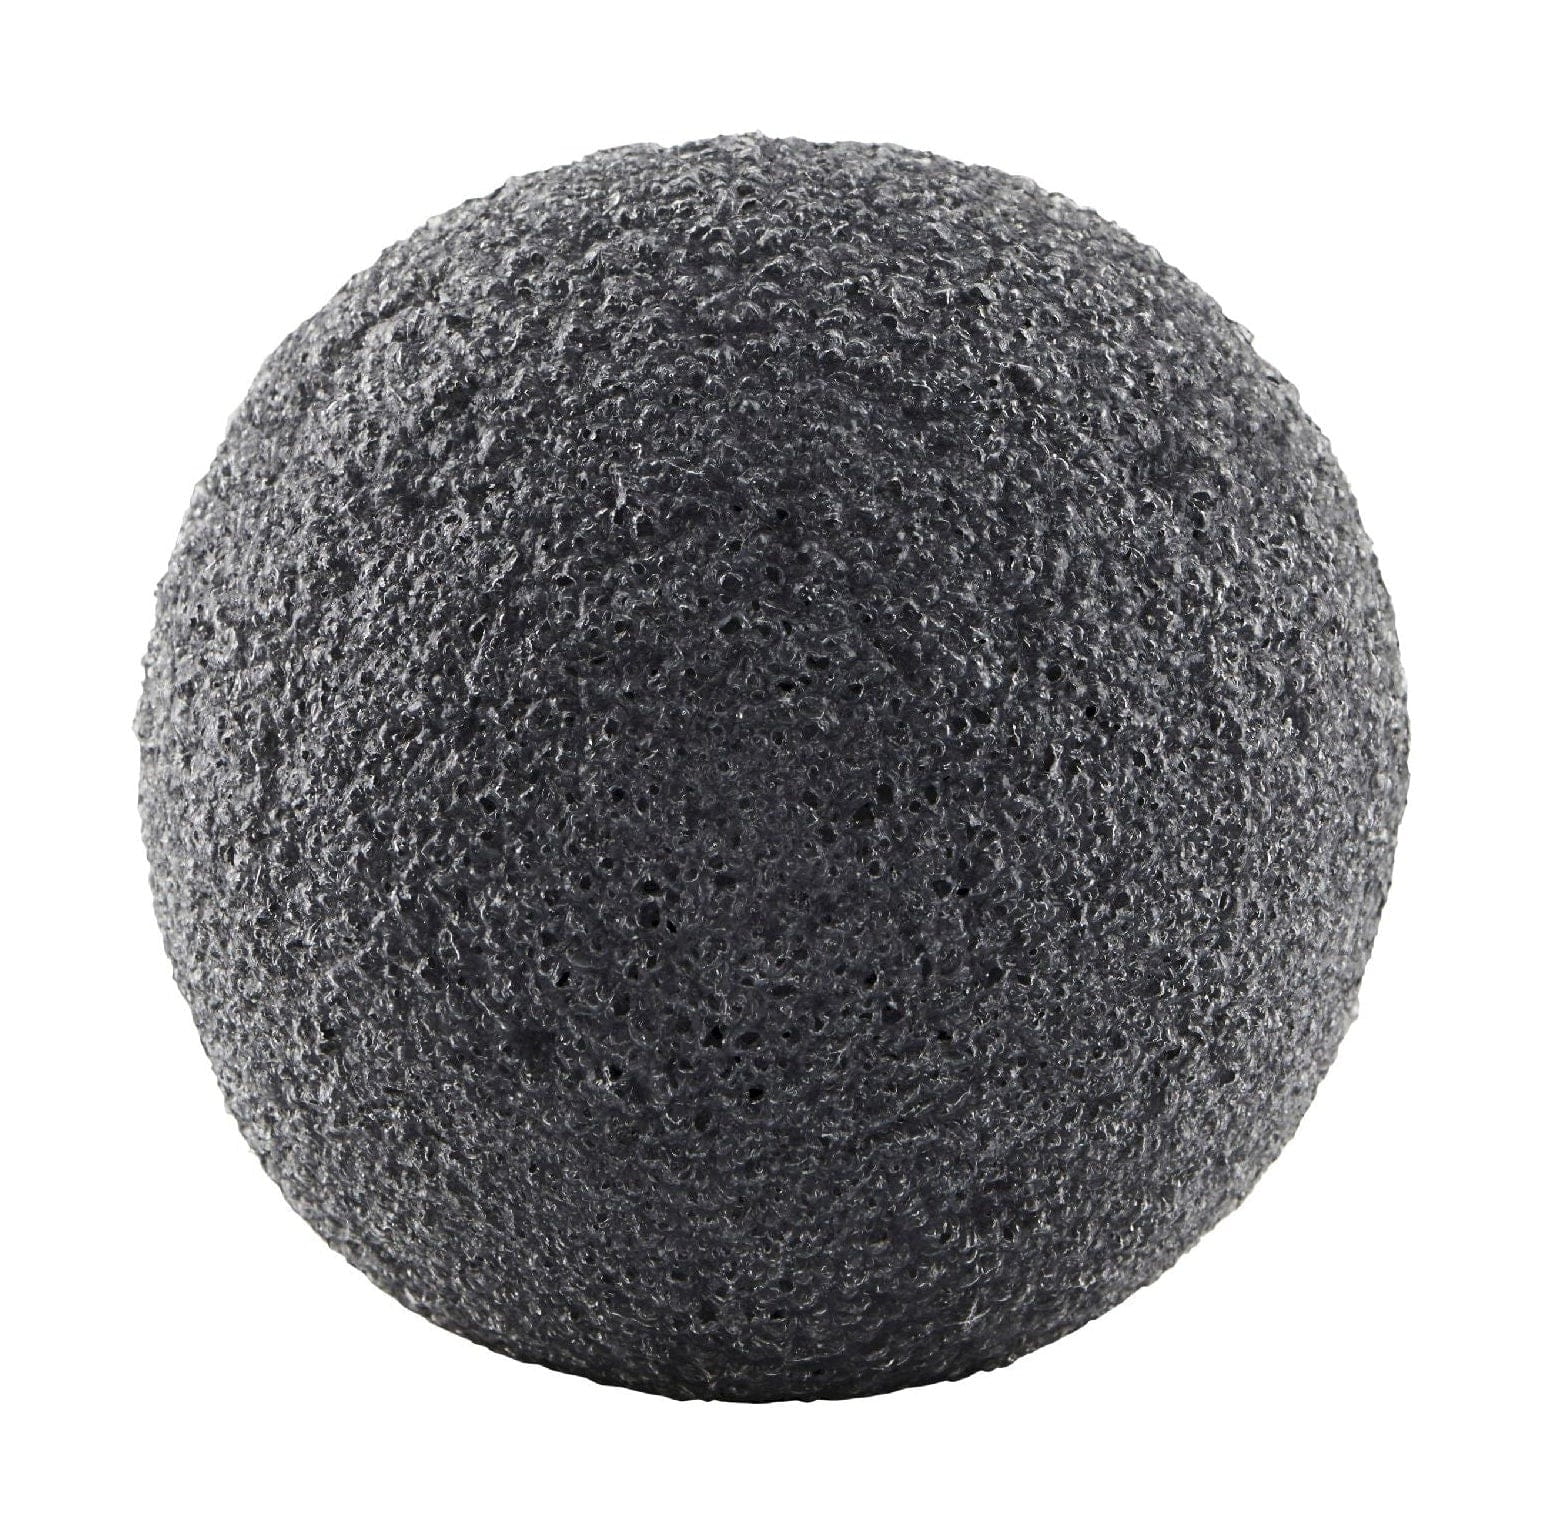 Esponja de Meraki Konjac 6 G, carbón de bambú